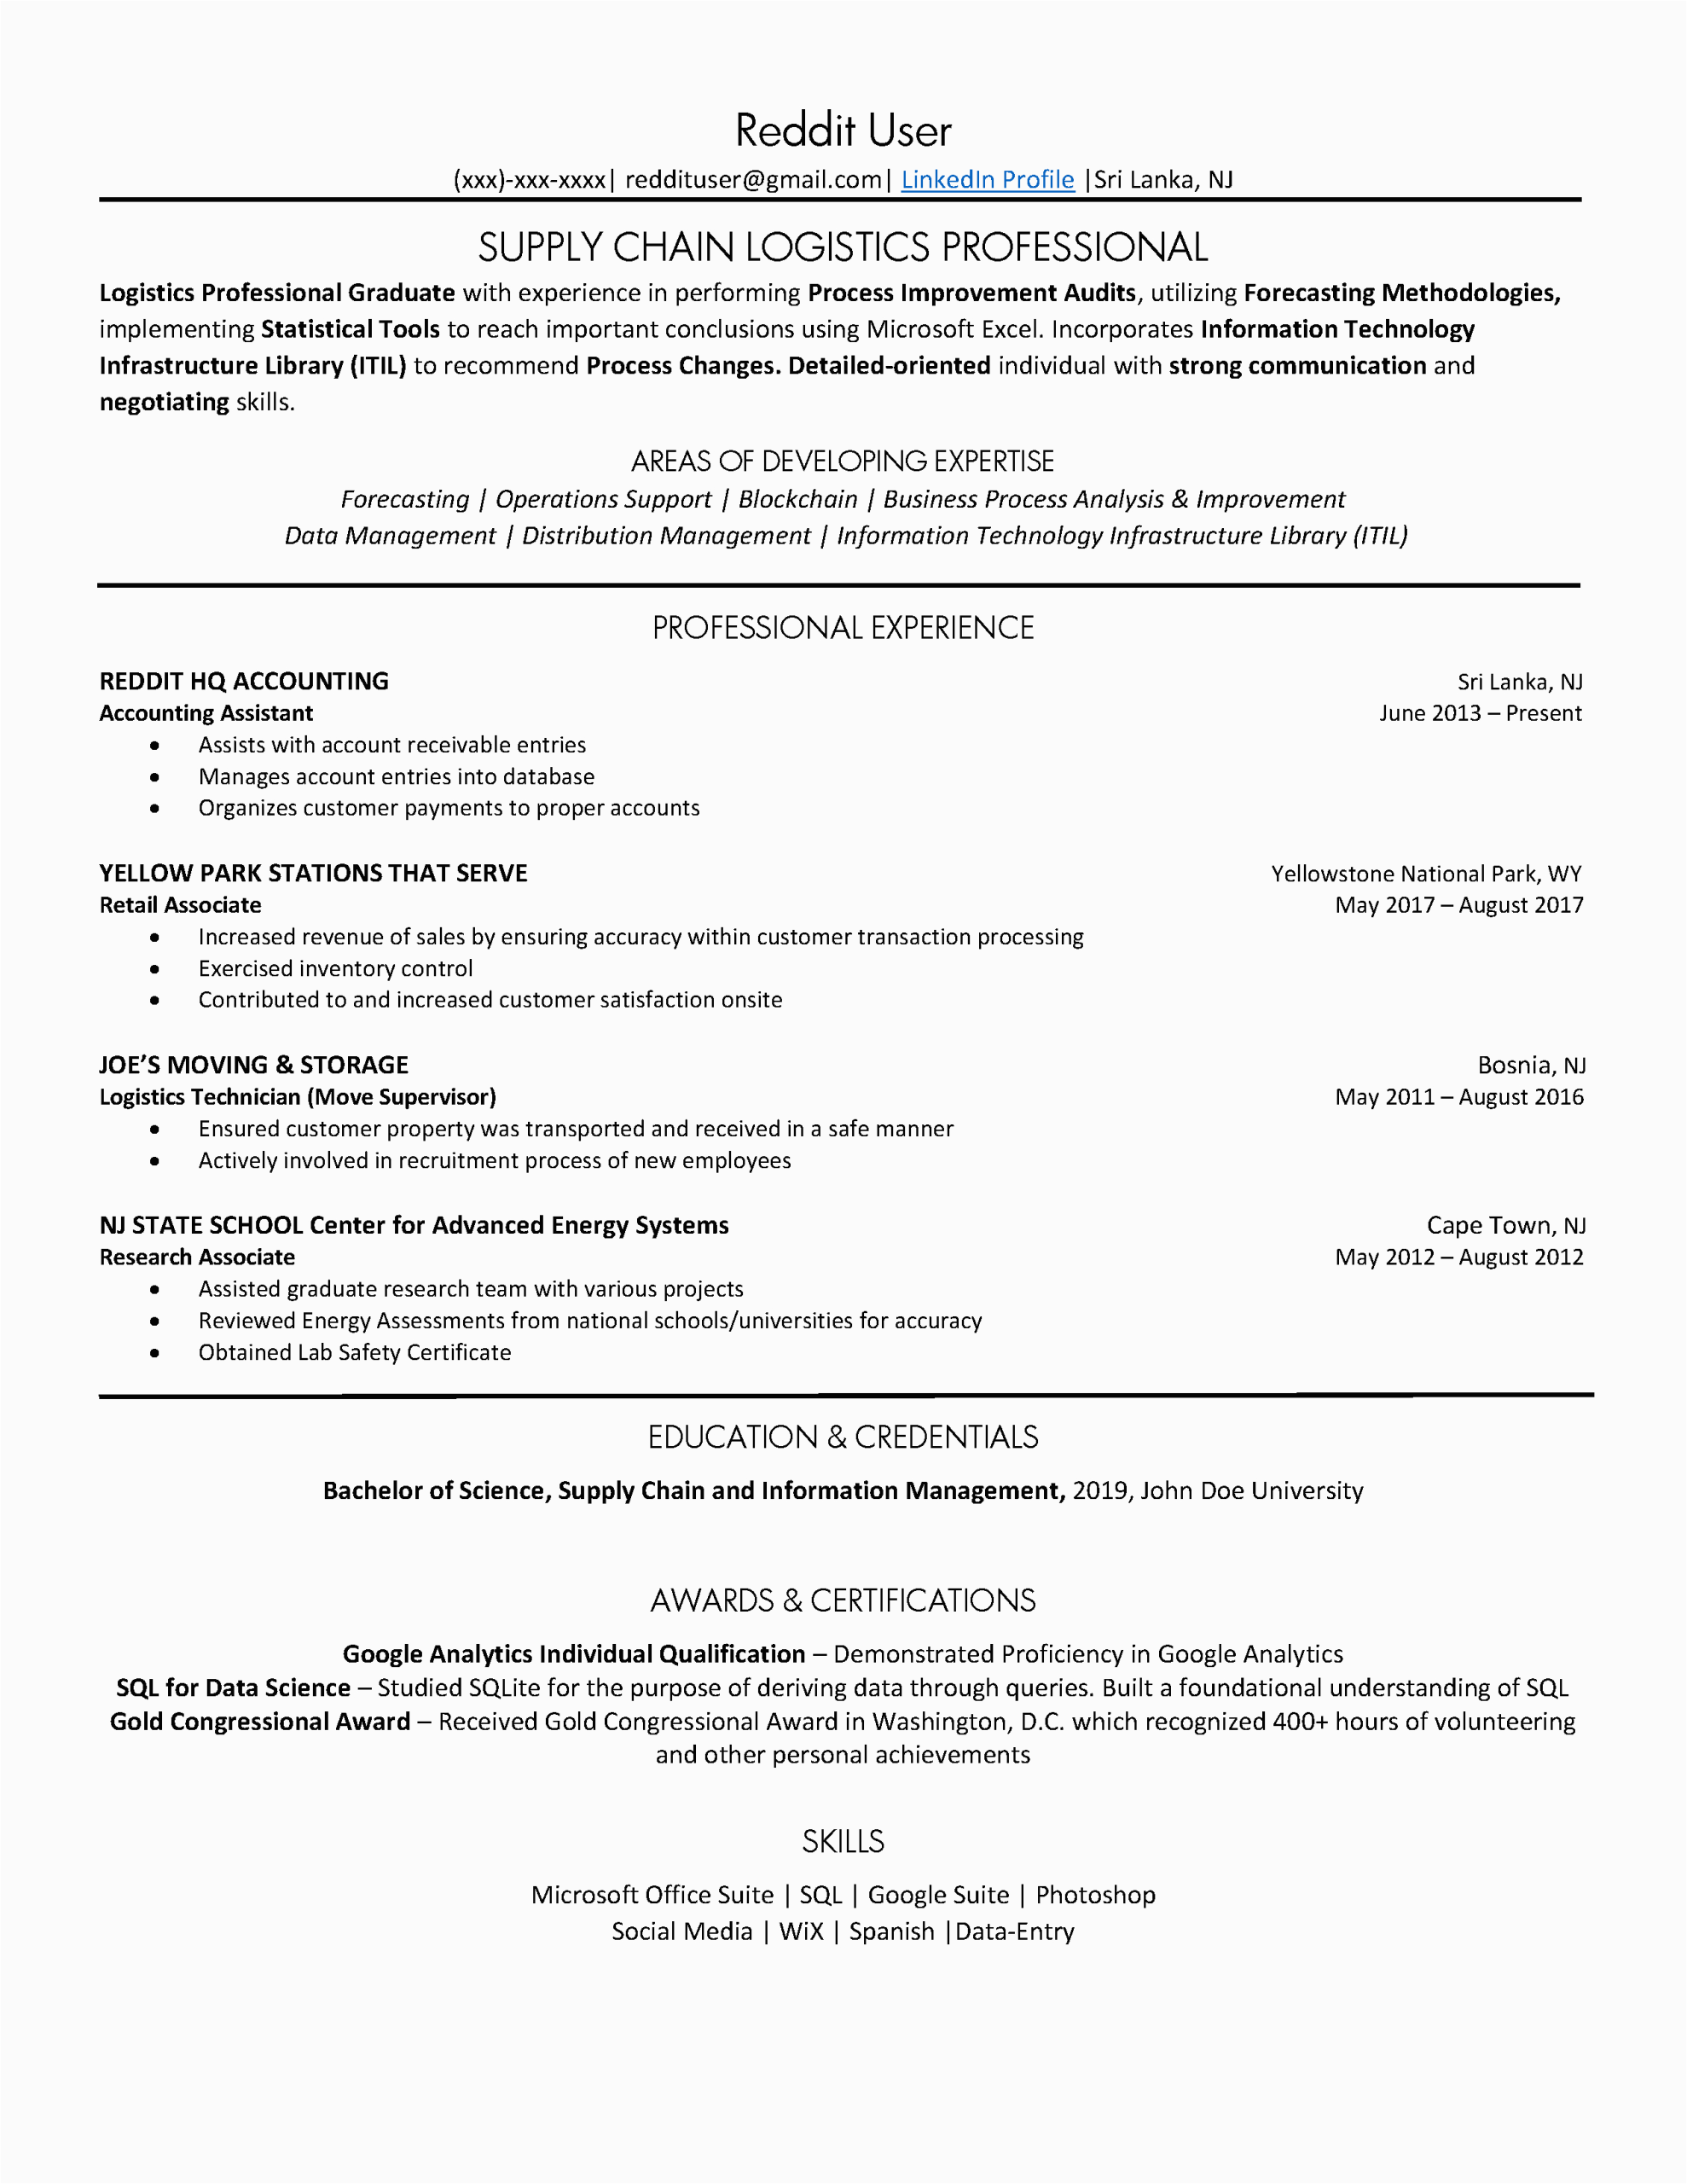 Sample Resume for Entry Level Supply Chain Recent Grad Applying to Entry Level Supply Chain Jobs Help Pls